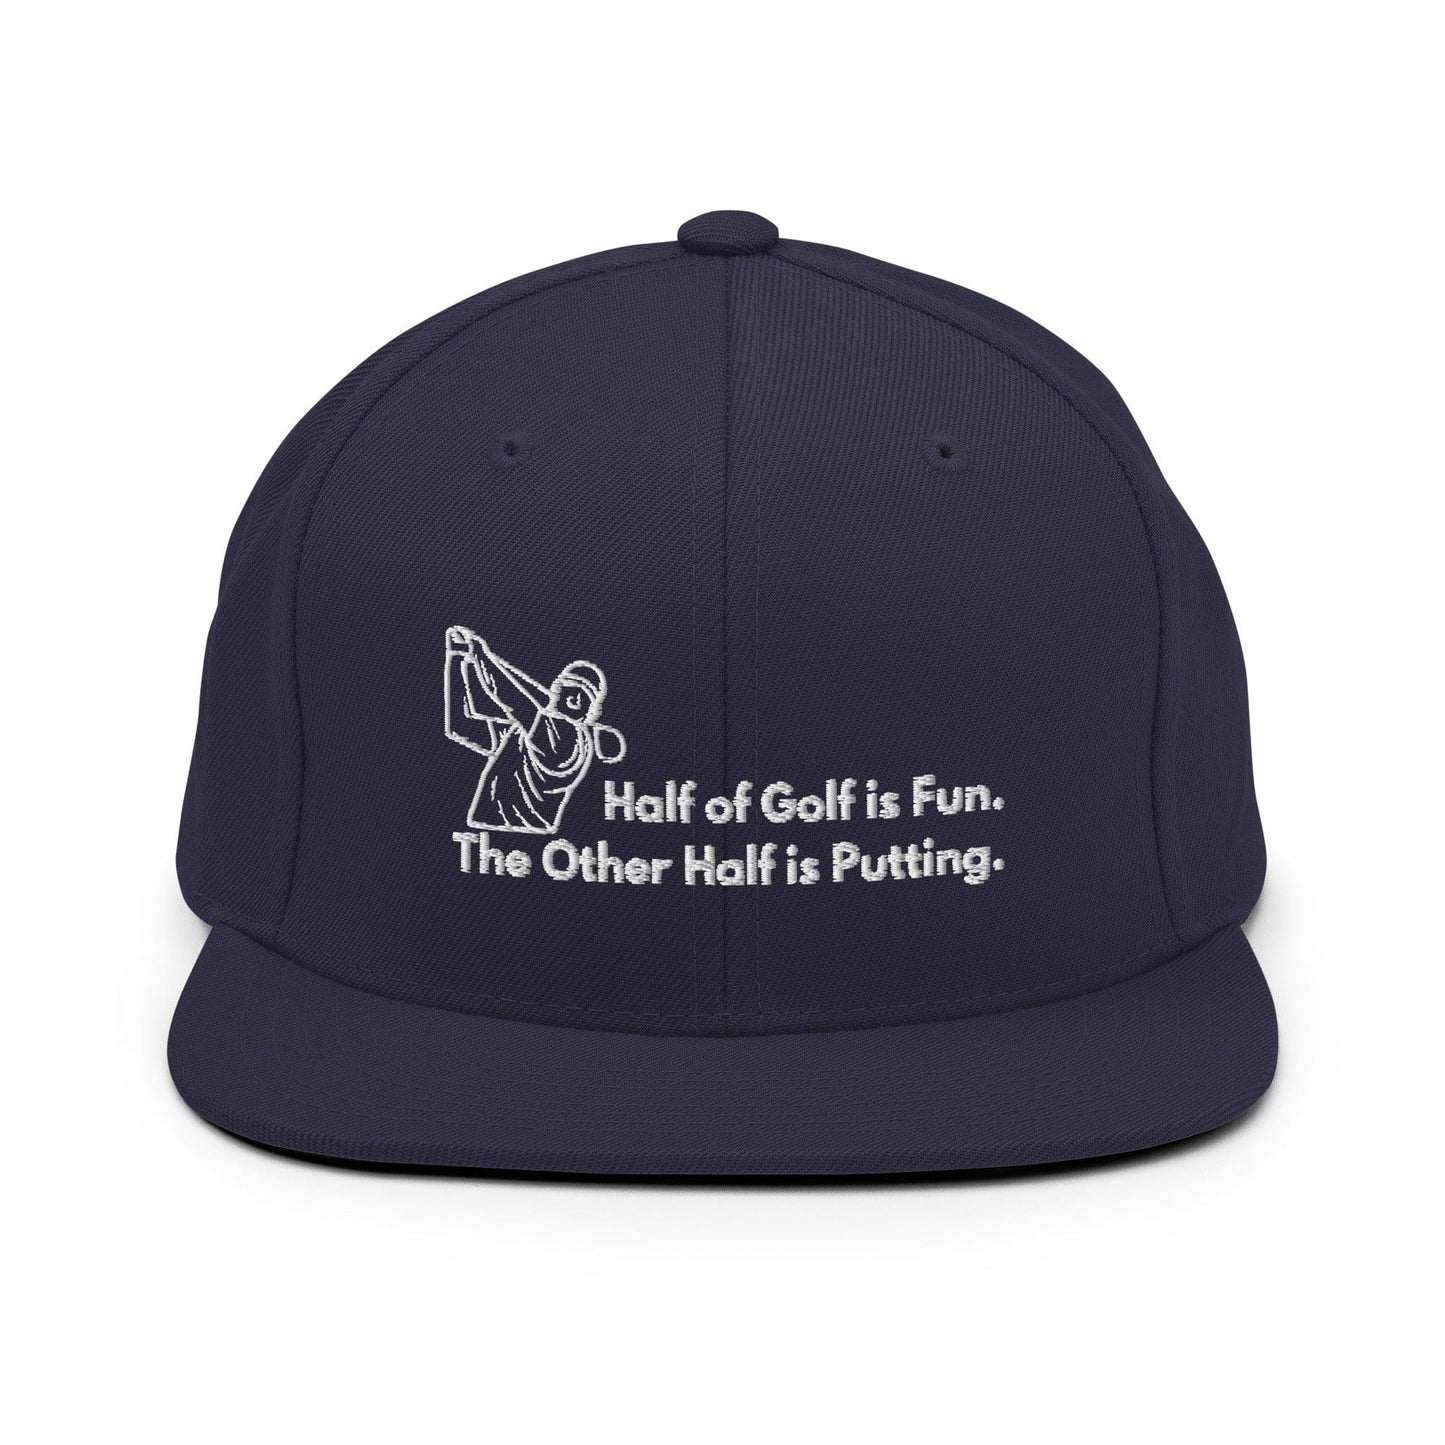 Funny Golfer Gifts  Snapback Hat Navy Half of Golf is Fun Snapback Hat